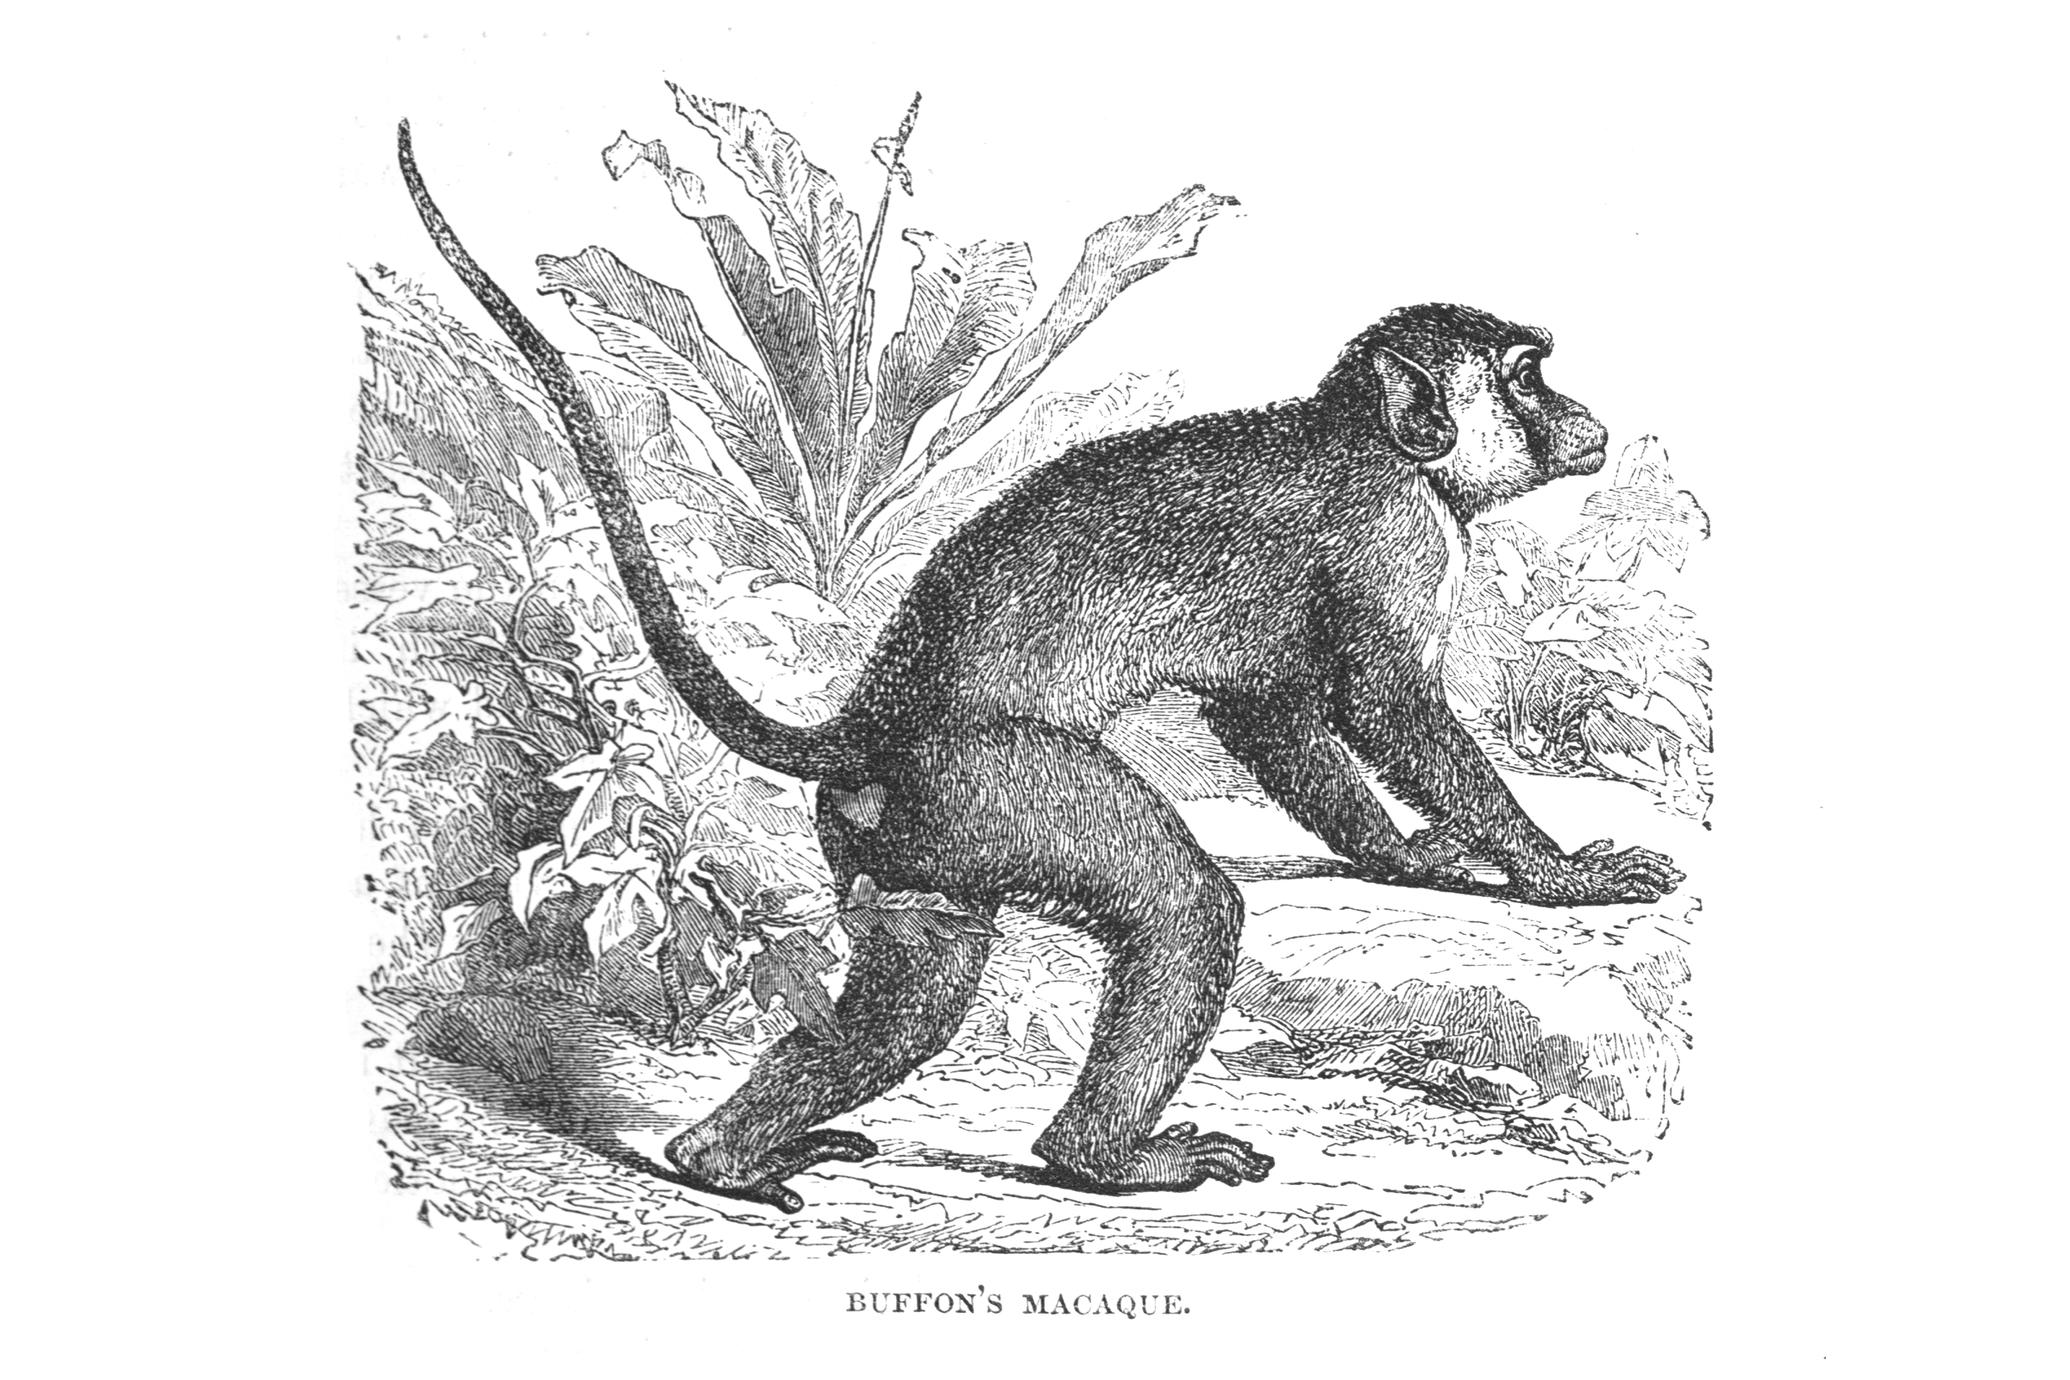 Buffon's Macaque